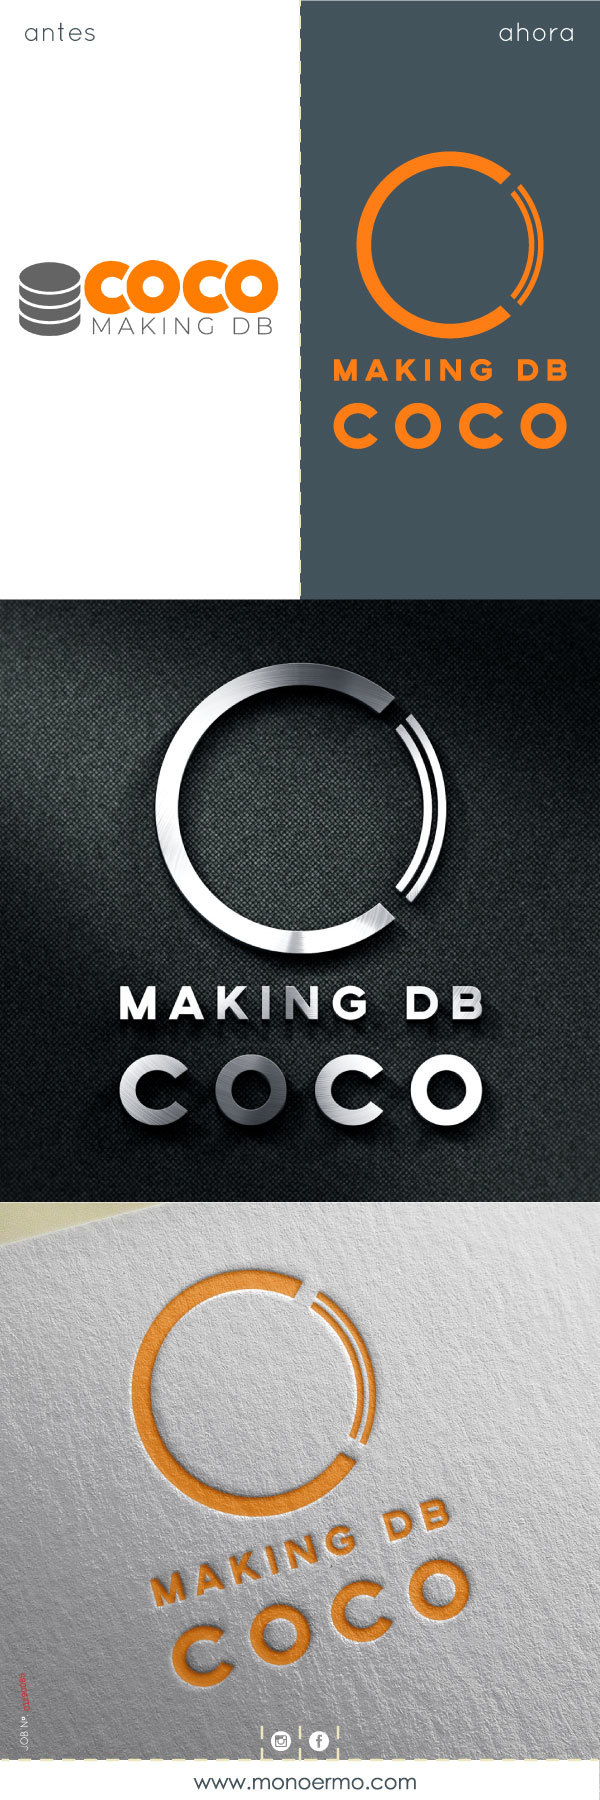 Rebranding CocoMaking DB